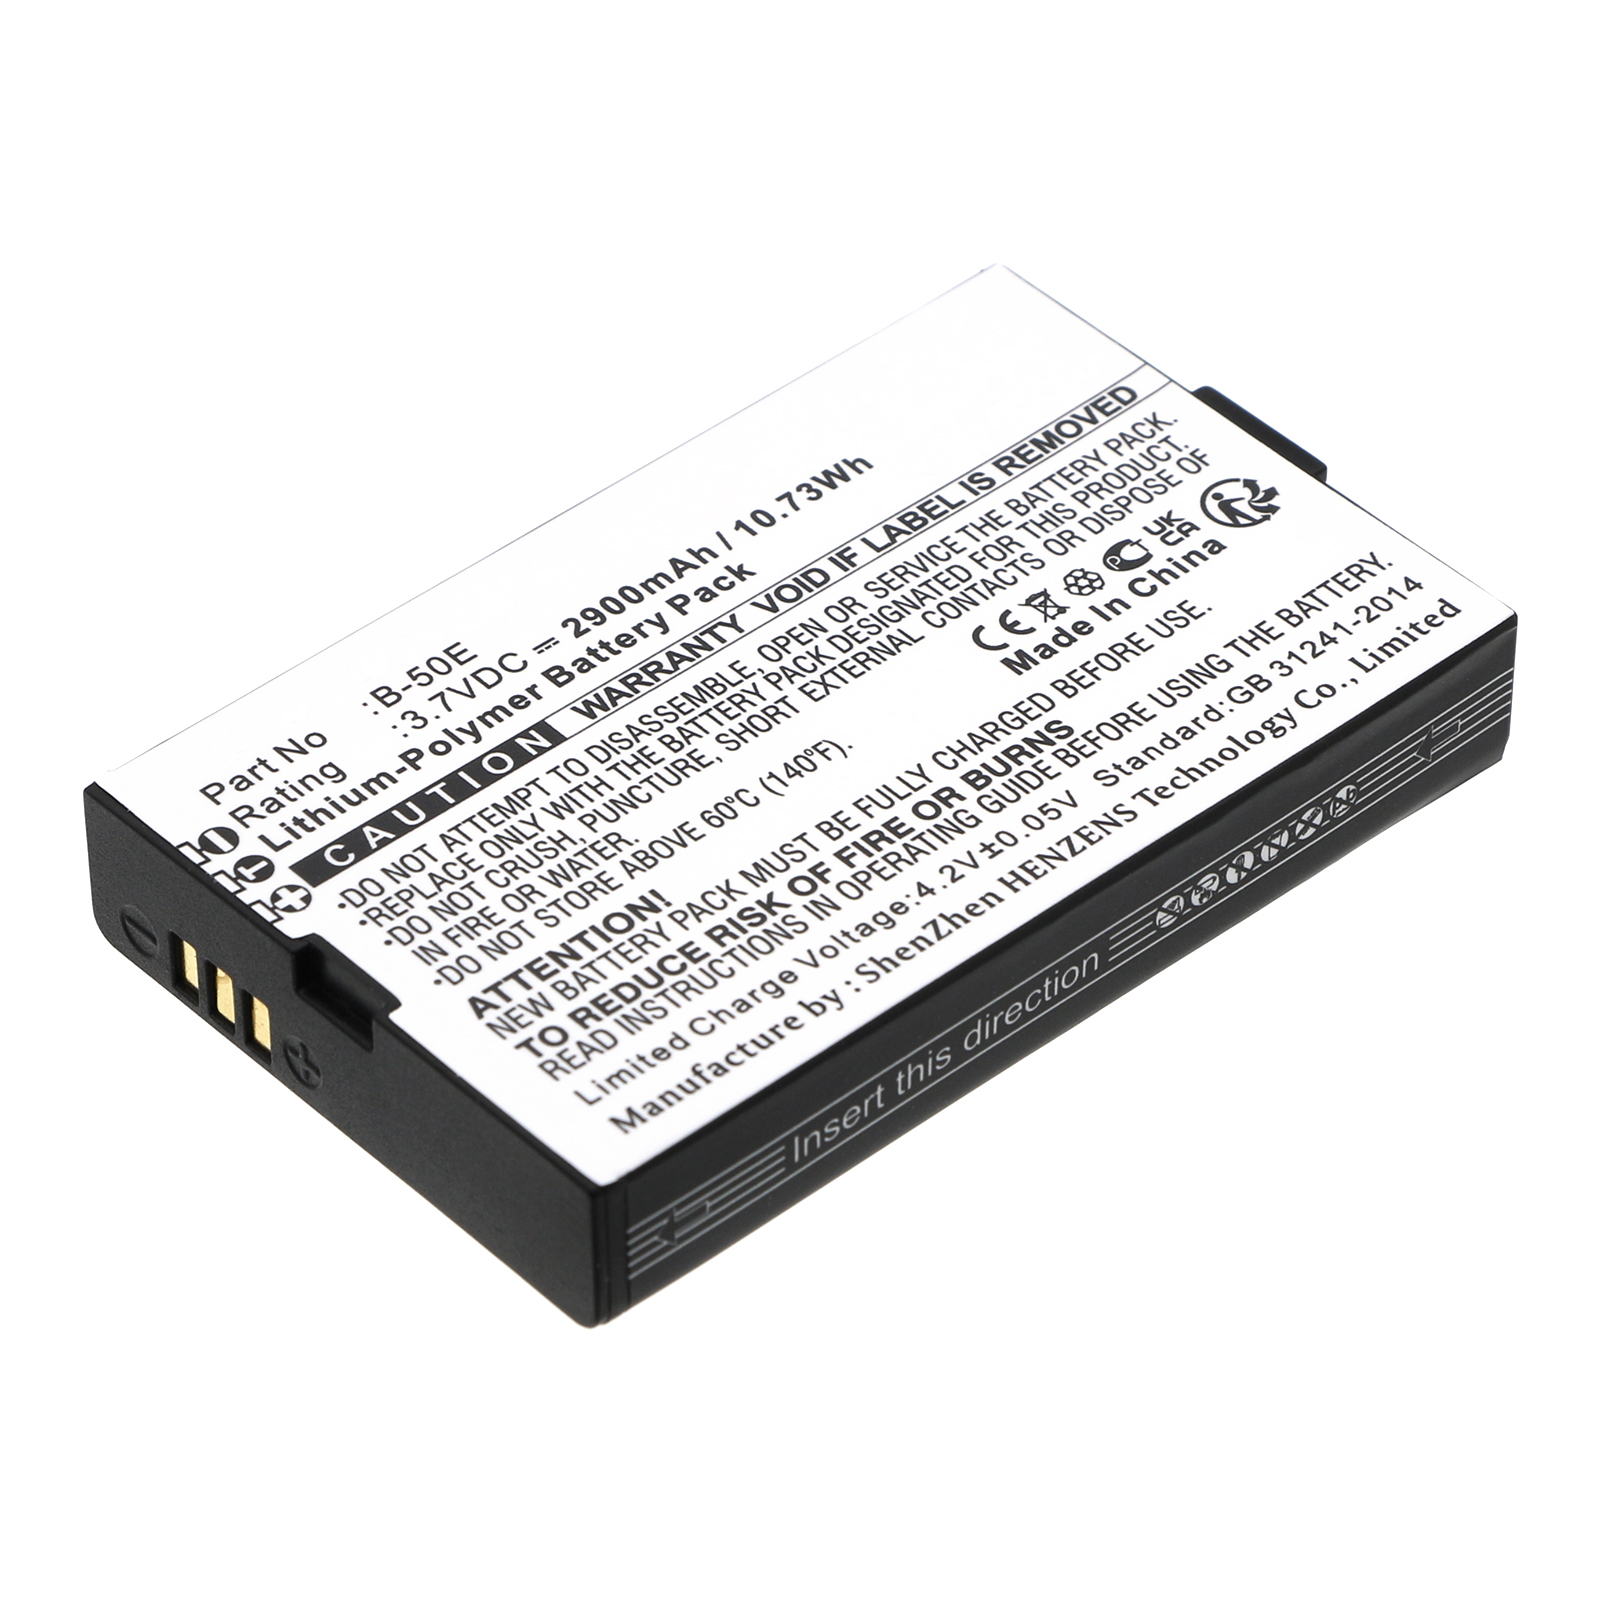 Synergy Digital 2-Way Radio Battery, Compatible with Inrico B-50E 2-Way Radio Battery (Li-Pol, 3.7V, 2900mAh)